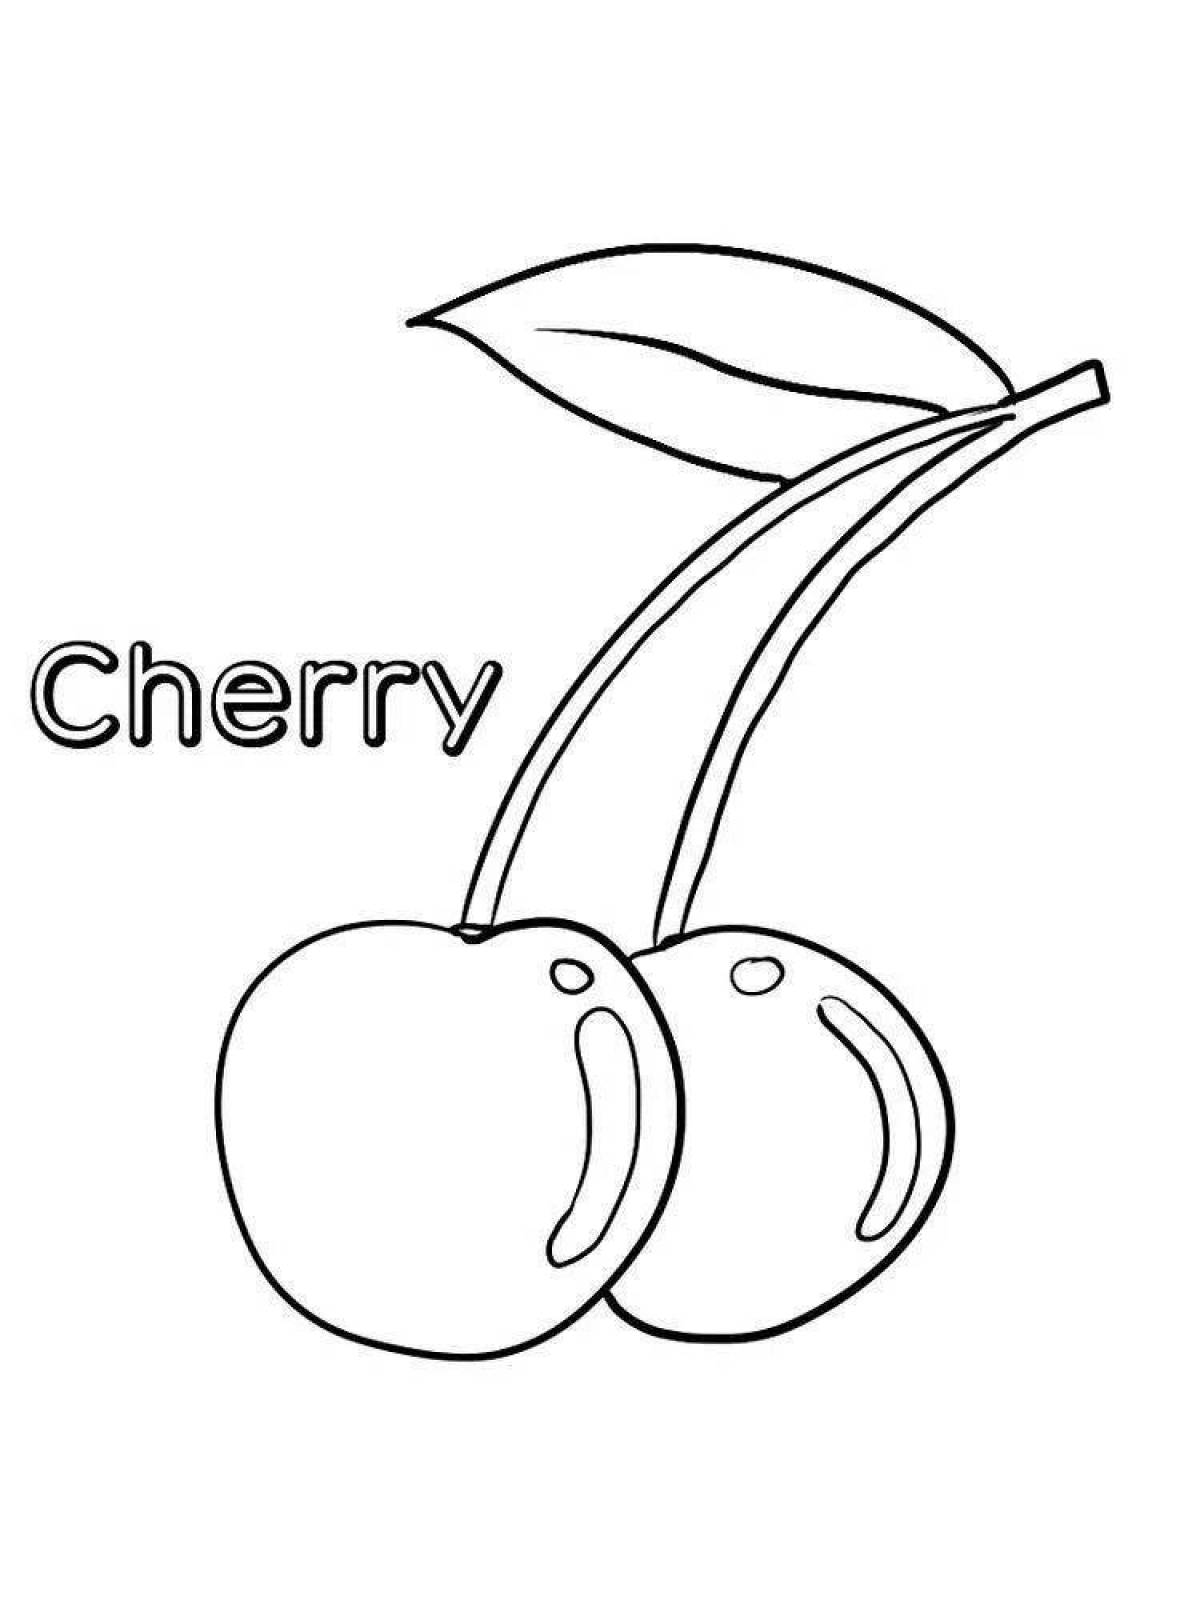 Cherry разукрашка